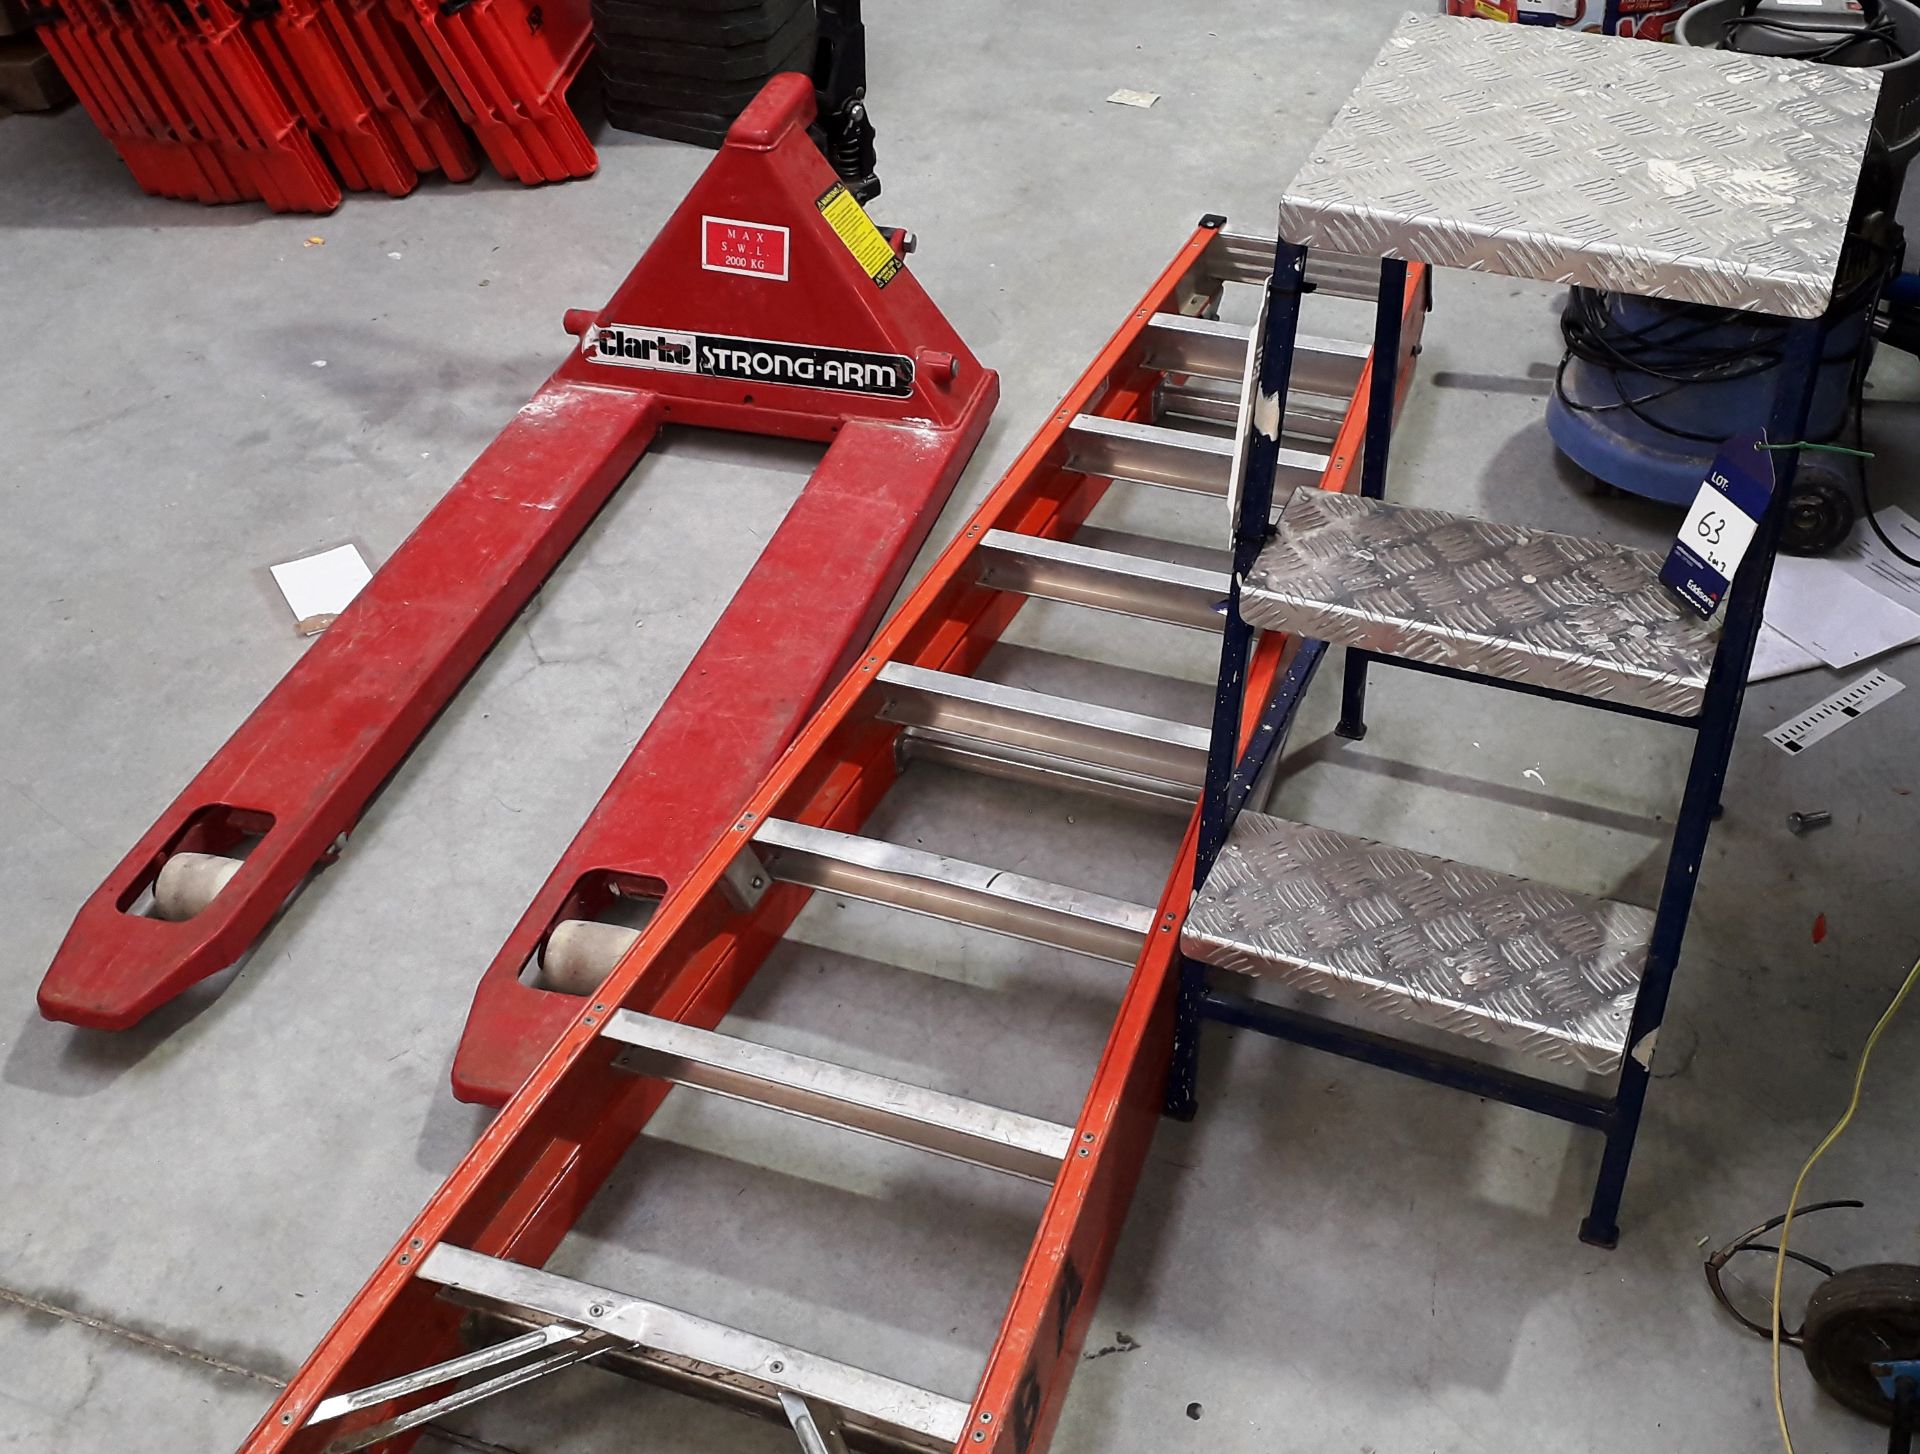 1 x 8 rung trestle ladder, 1 x 3 rung platform, 1 x Clarke strong arm 2000kg hydraulic pallet